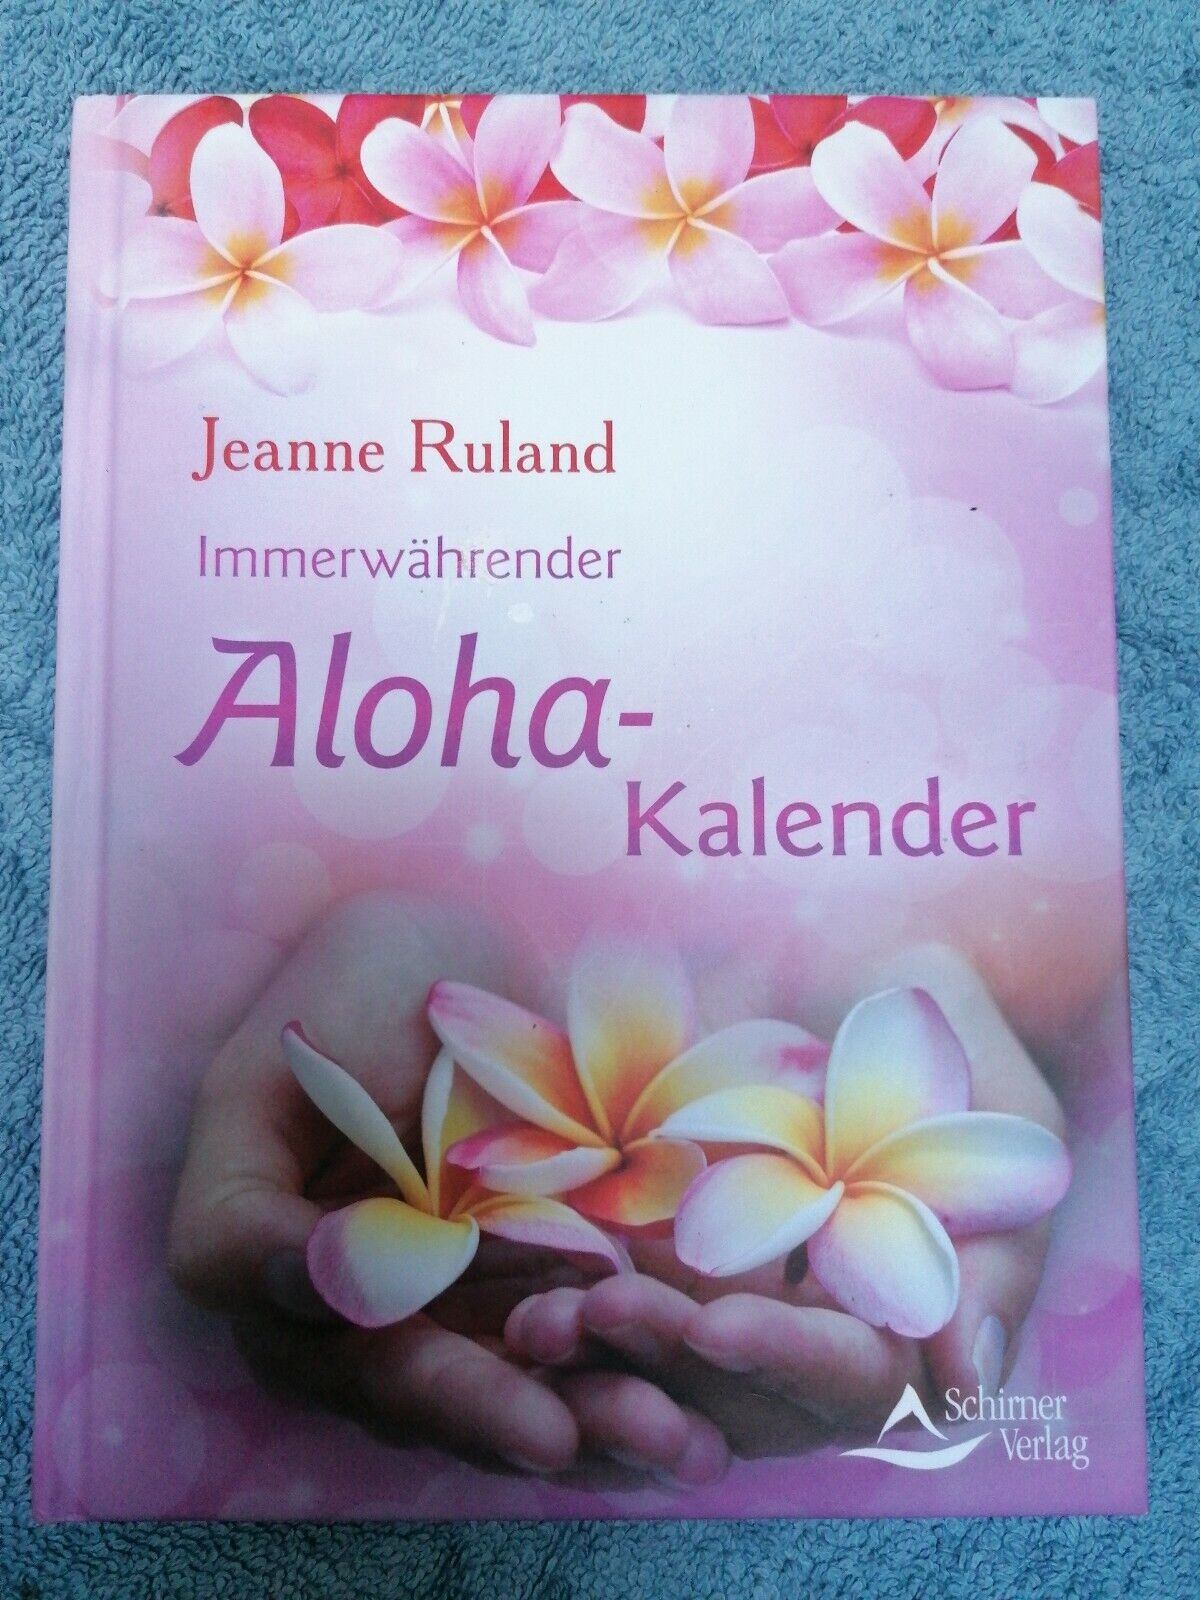 Immerwährender Aloha - Kalender Jeanne Ruland Schirner Verlag spiritueller Plan - Jeanne Ruhland